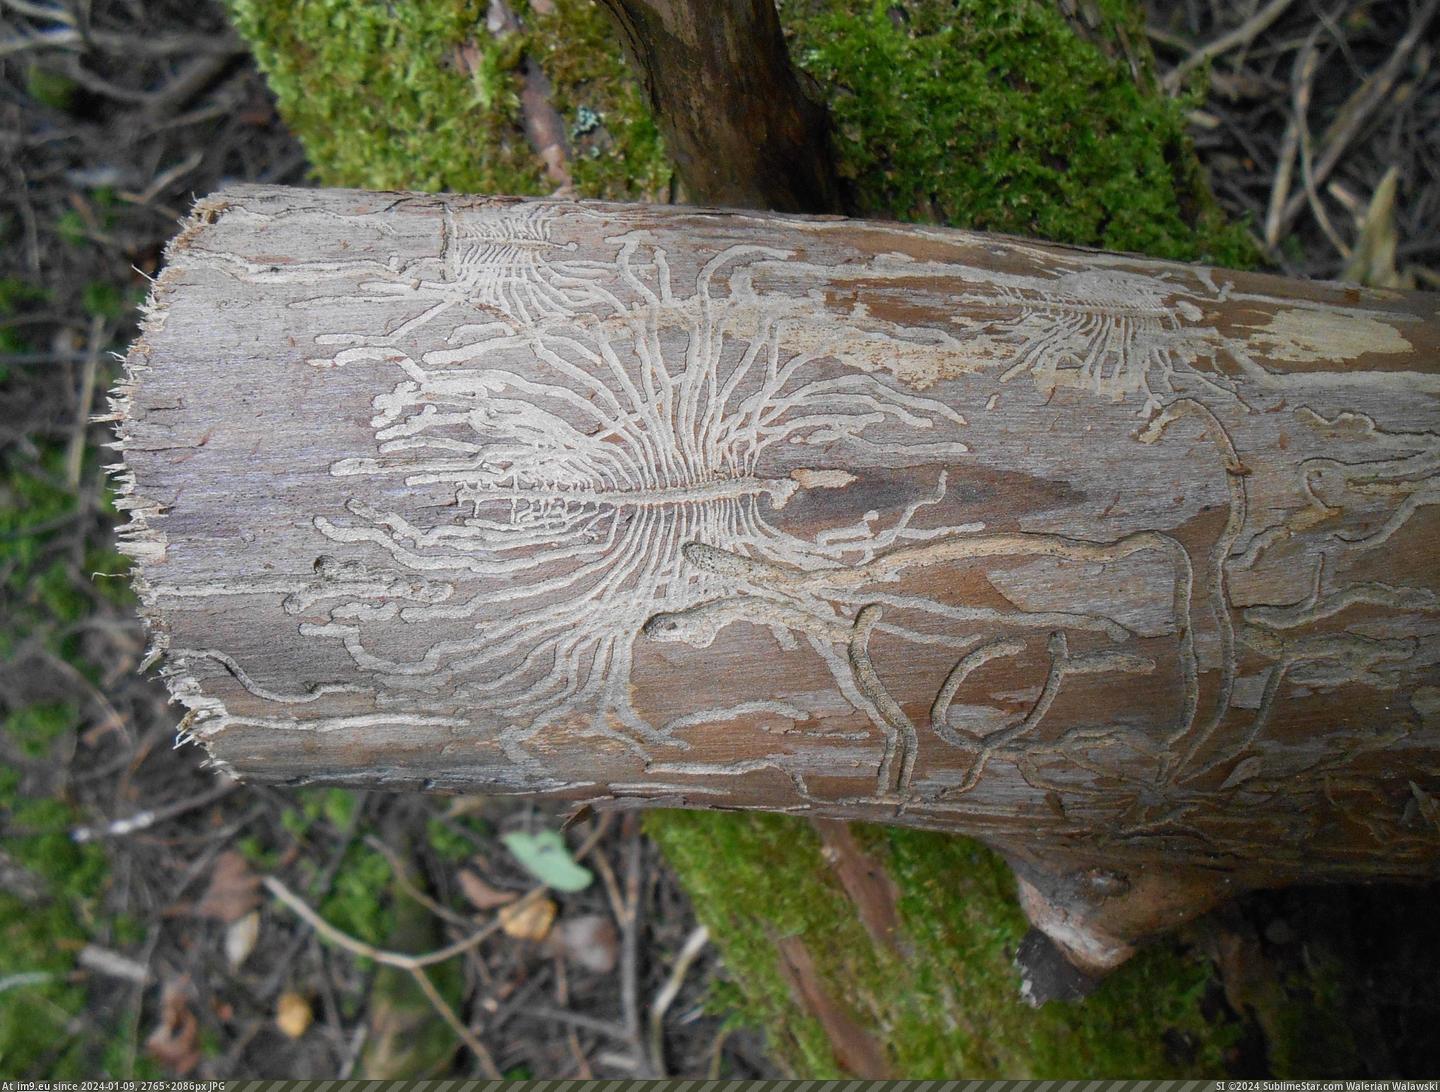 #Interesting #Pattern #Worms #Log #Carved [Mildlyinteresting] Interesting pattern carved by worms on a log Pic. (Bild von album My r/MILDLYINTERESTING favs))